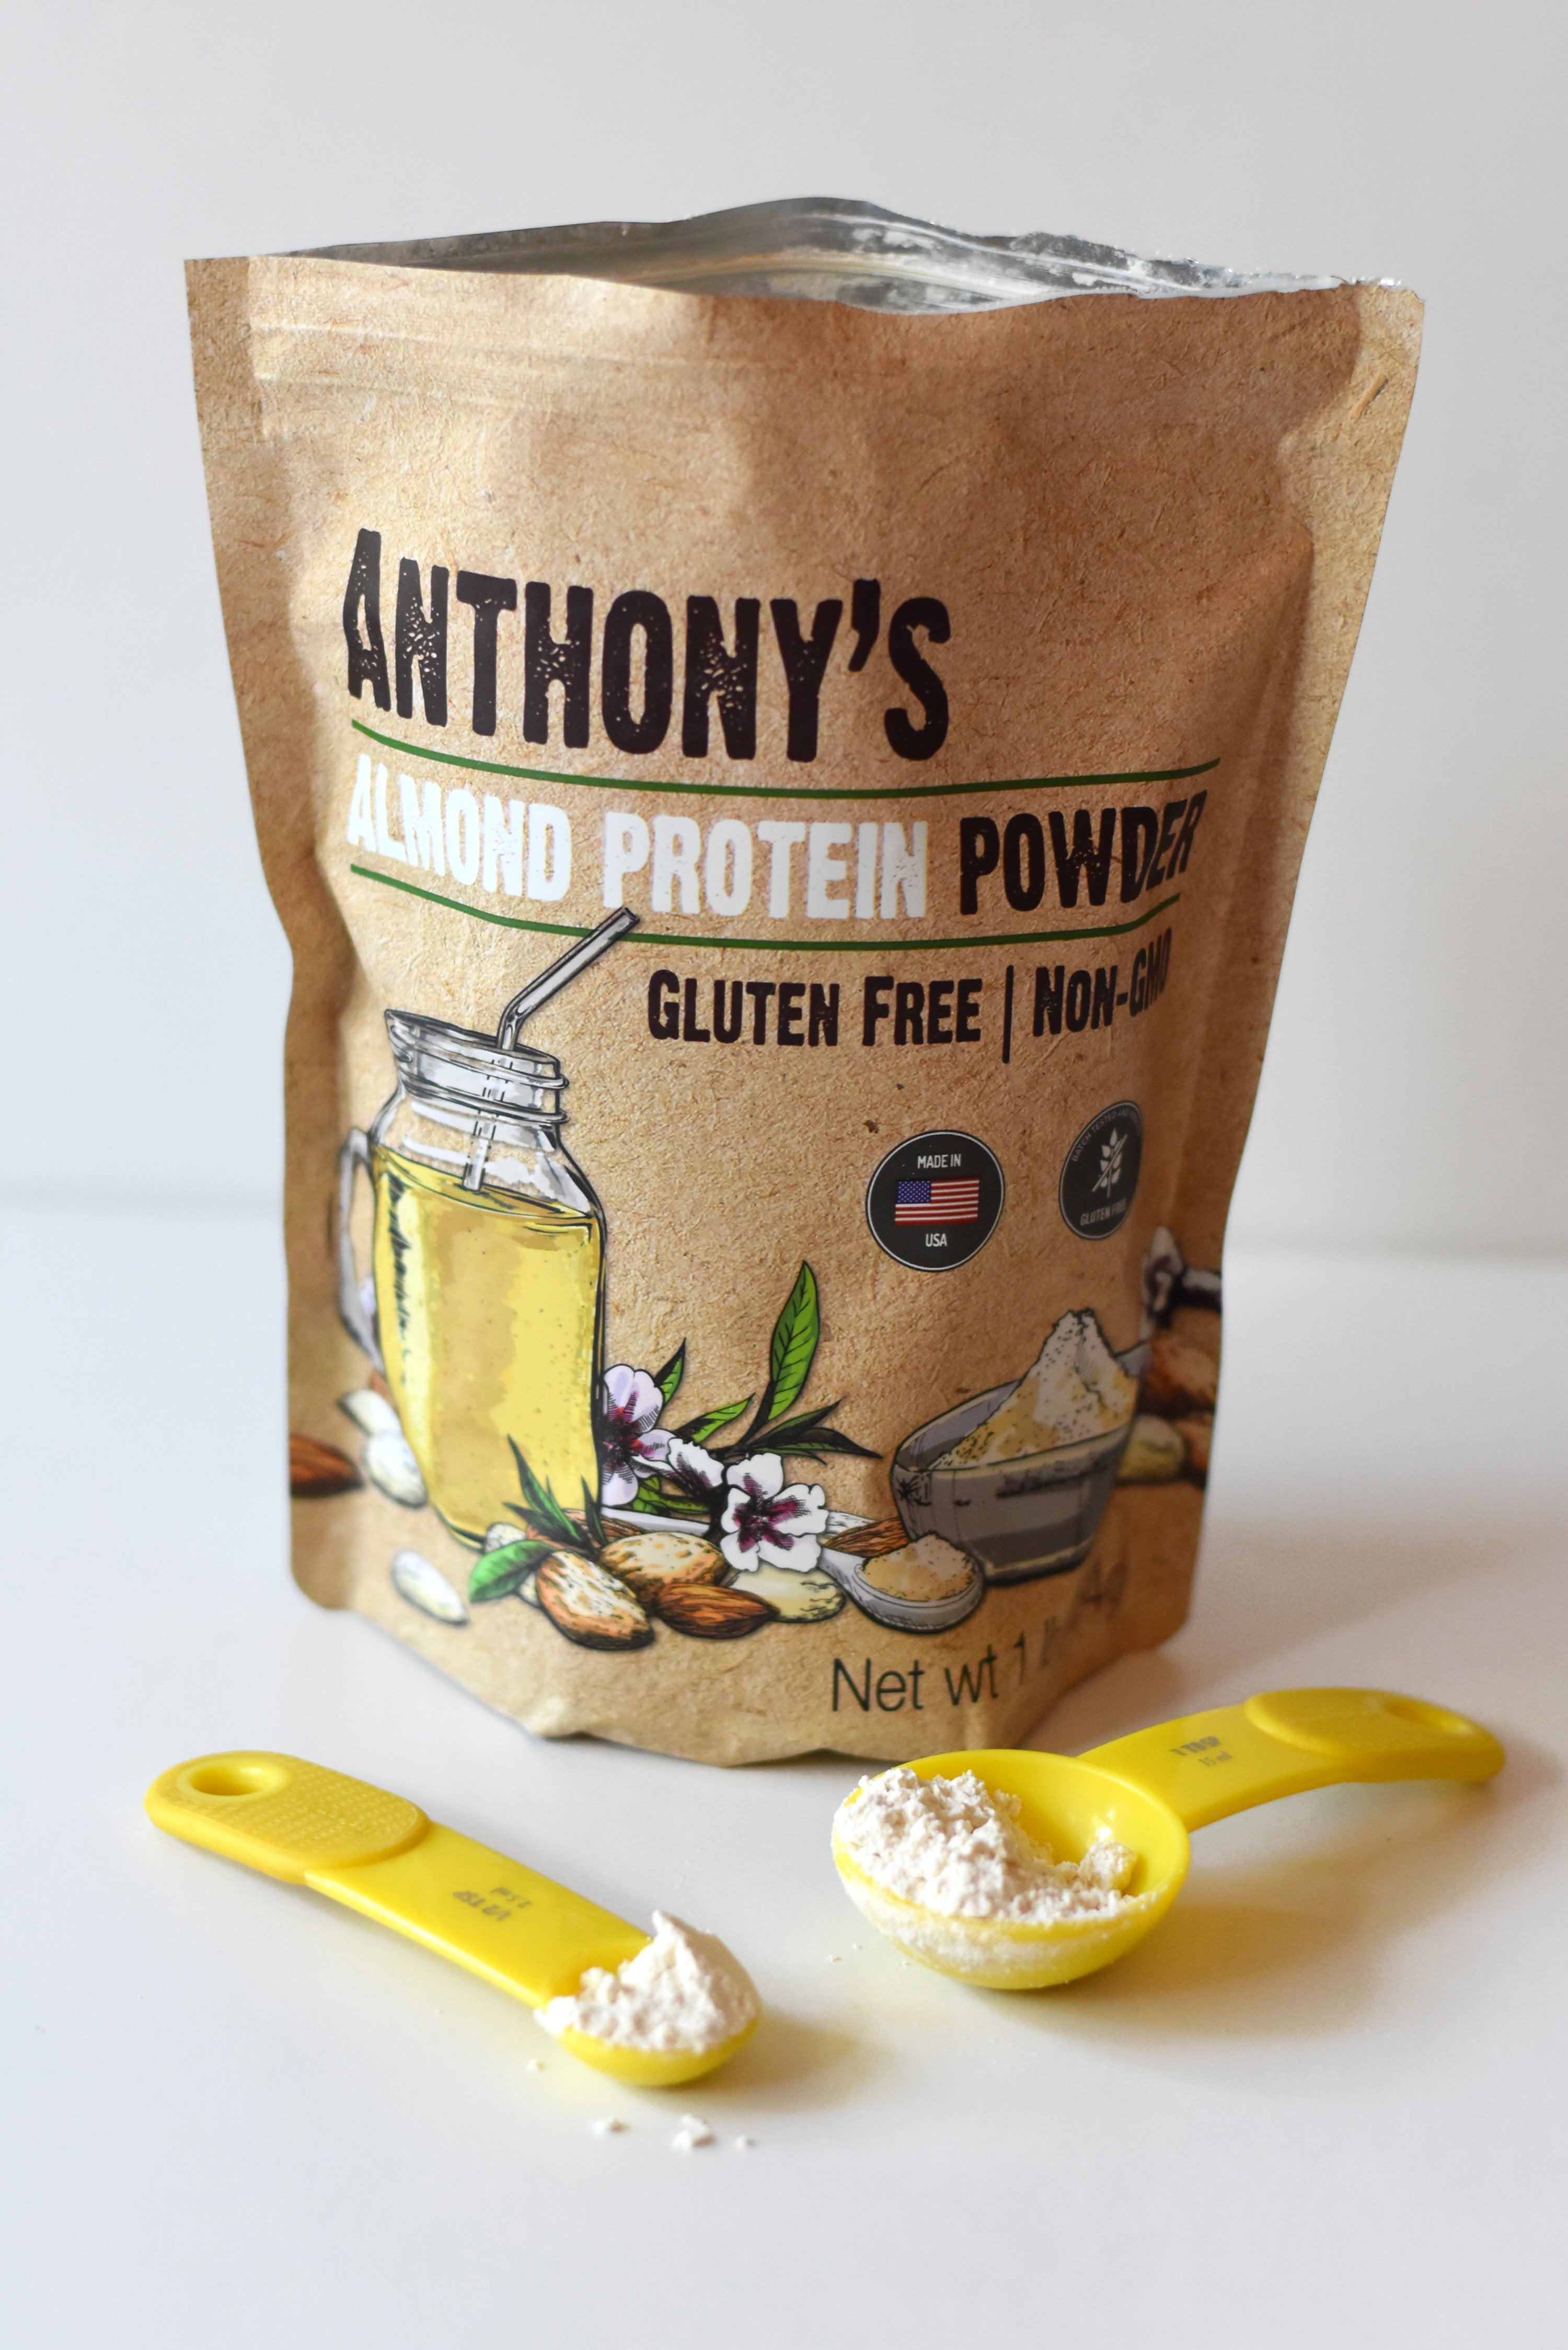 Almond Protein Powder: Gluten Free & Non-GMO